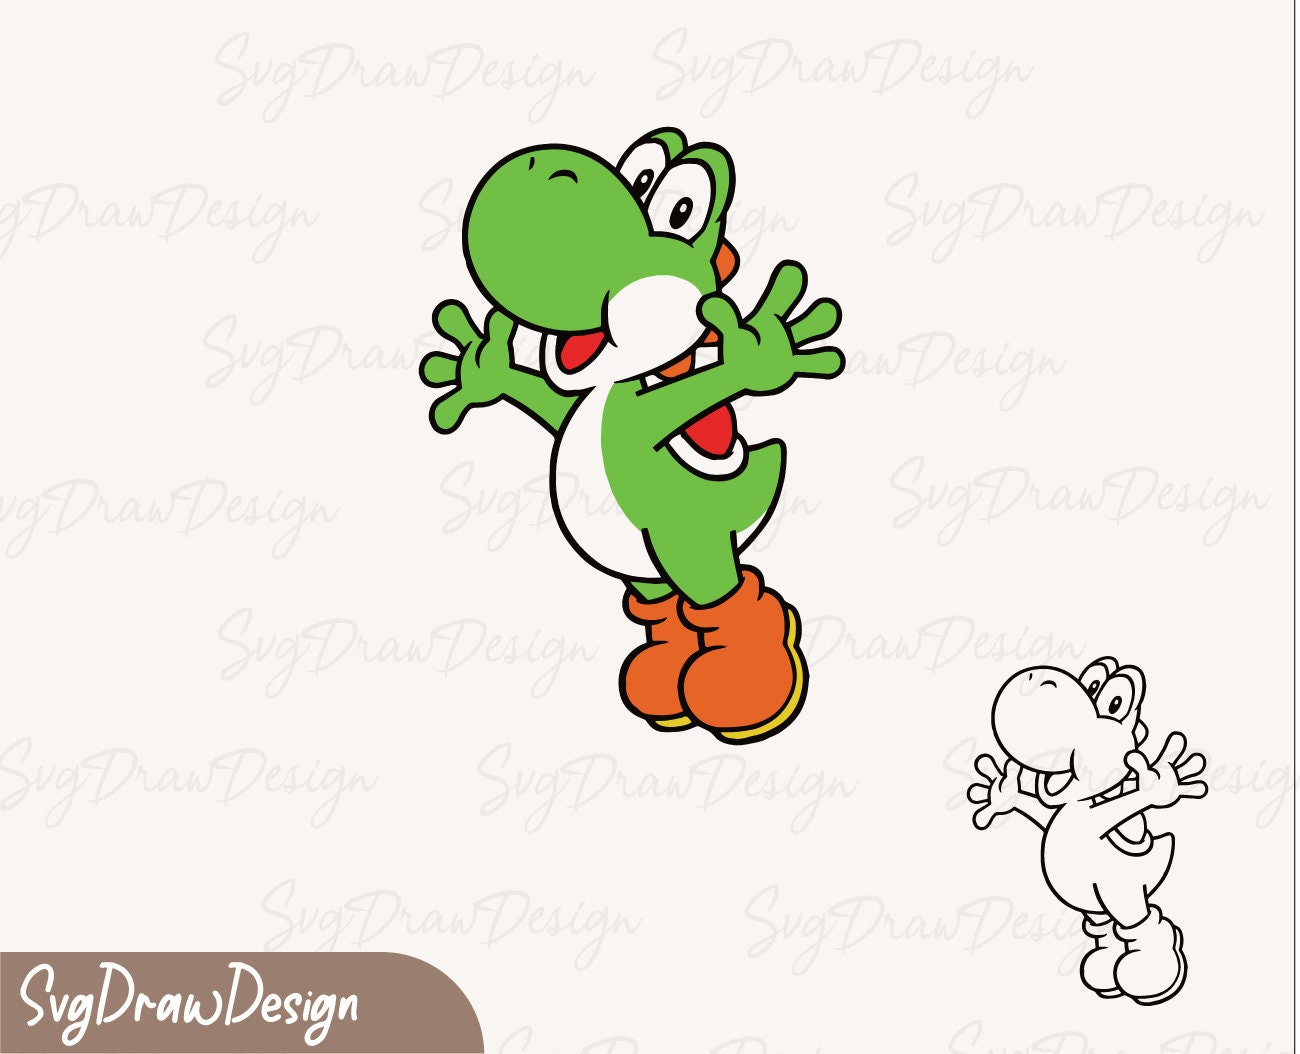 Super Mario Yoshi Luigi SVG - Free Download - Layered Mario Characters –  8SVG